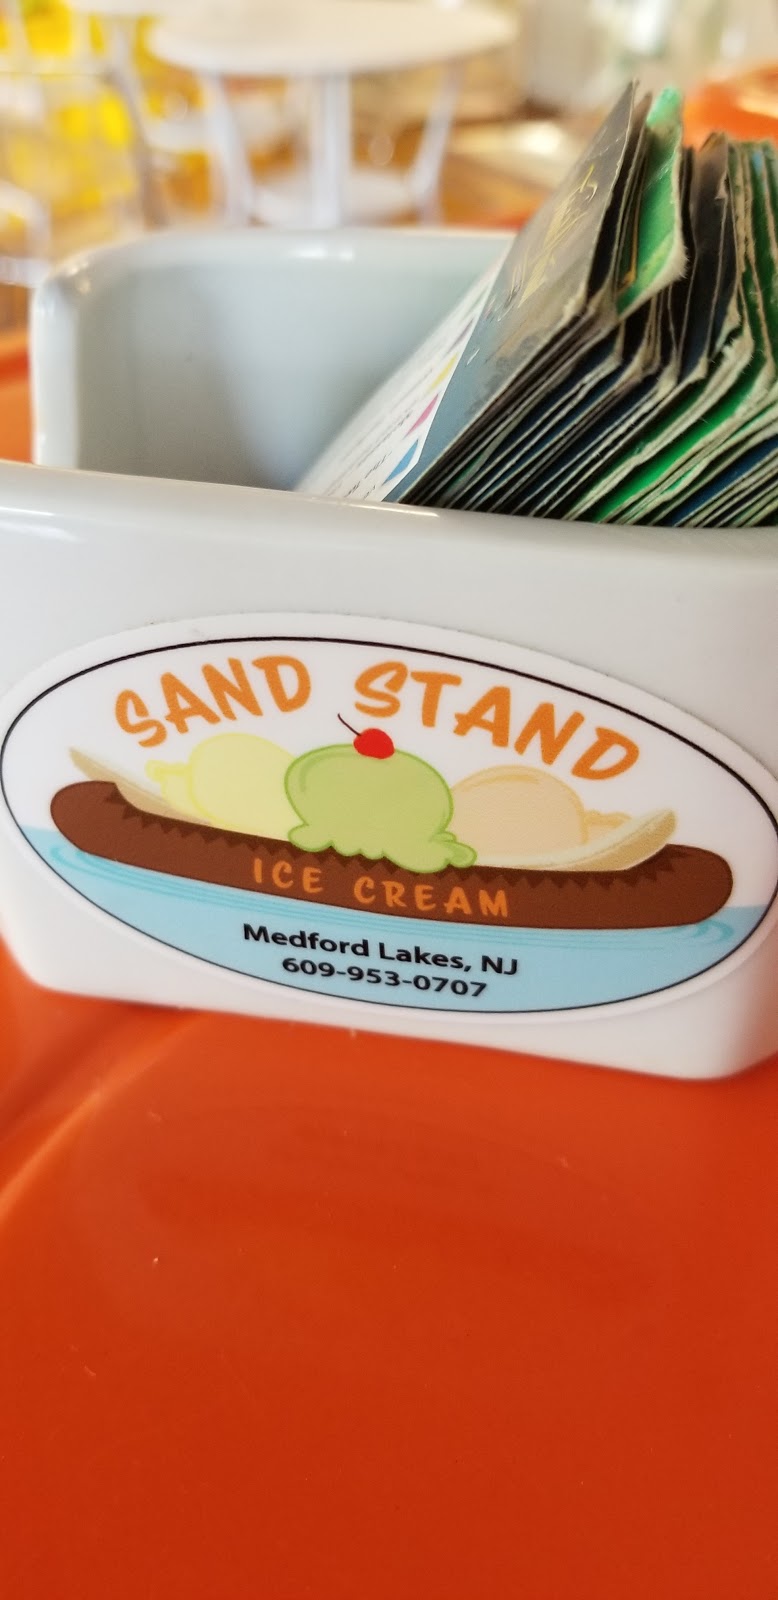 Sand Stand | 1 Trading Post Way, Medford Lakes, NJ 08055 | Phone: (609) 953-0707